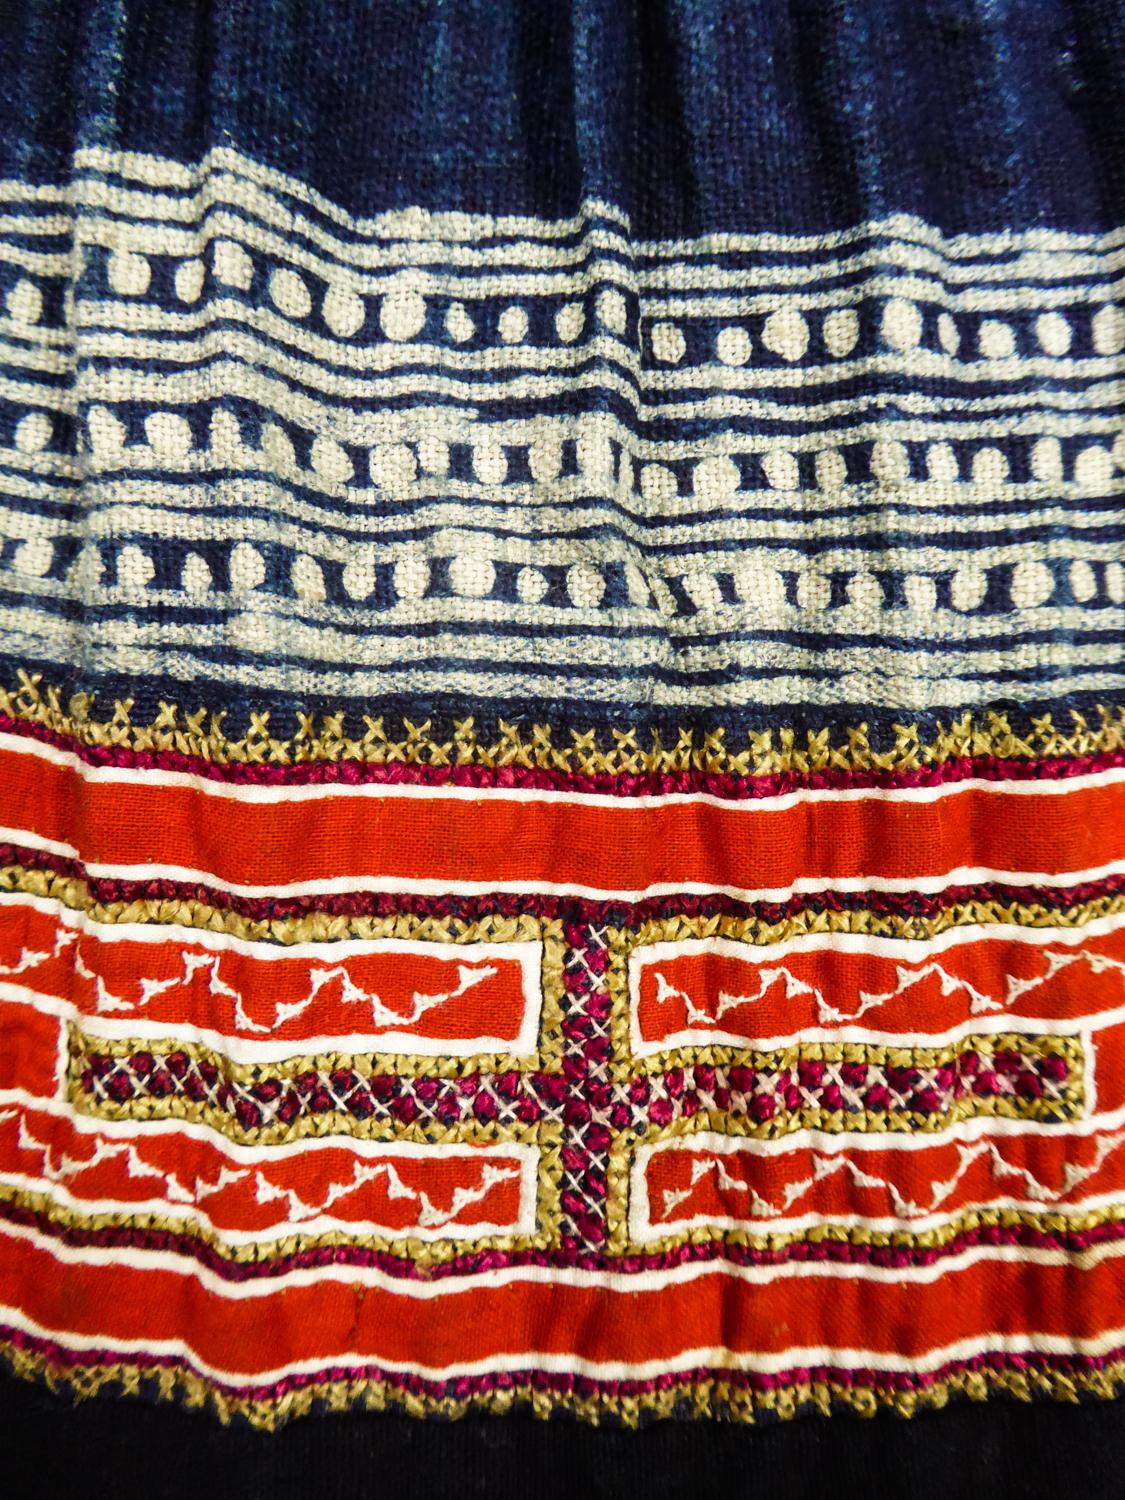 Black Miao - Hmong Pleated Skirt - Thailand Circa 1950